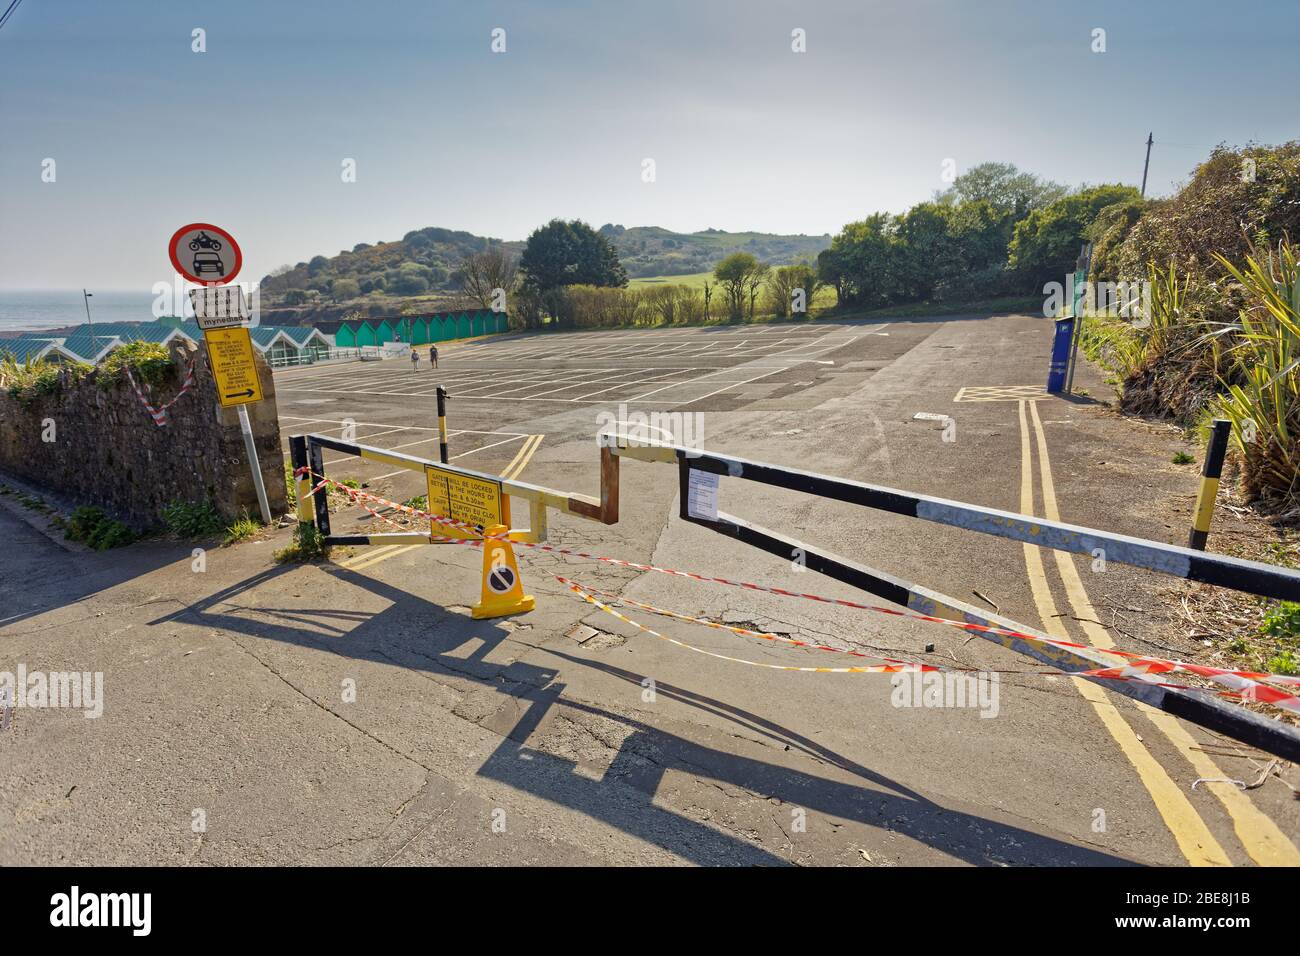 Im Bild: Der geschlossene Parkplatz in Langland Bay bei Swansea, Wales, UK. Re: Osterferien Wochenende, Covid-19 Coronavirus Pandemie, Swasea, UK. Stockfoto